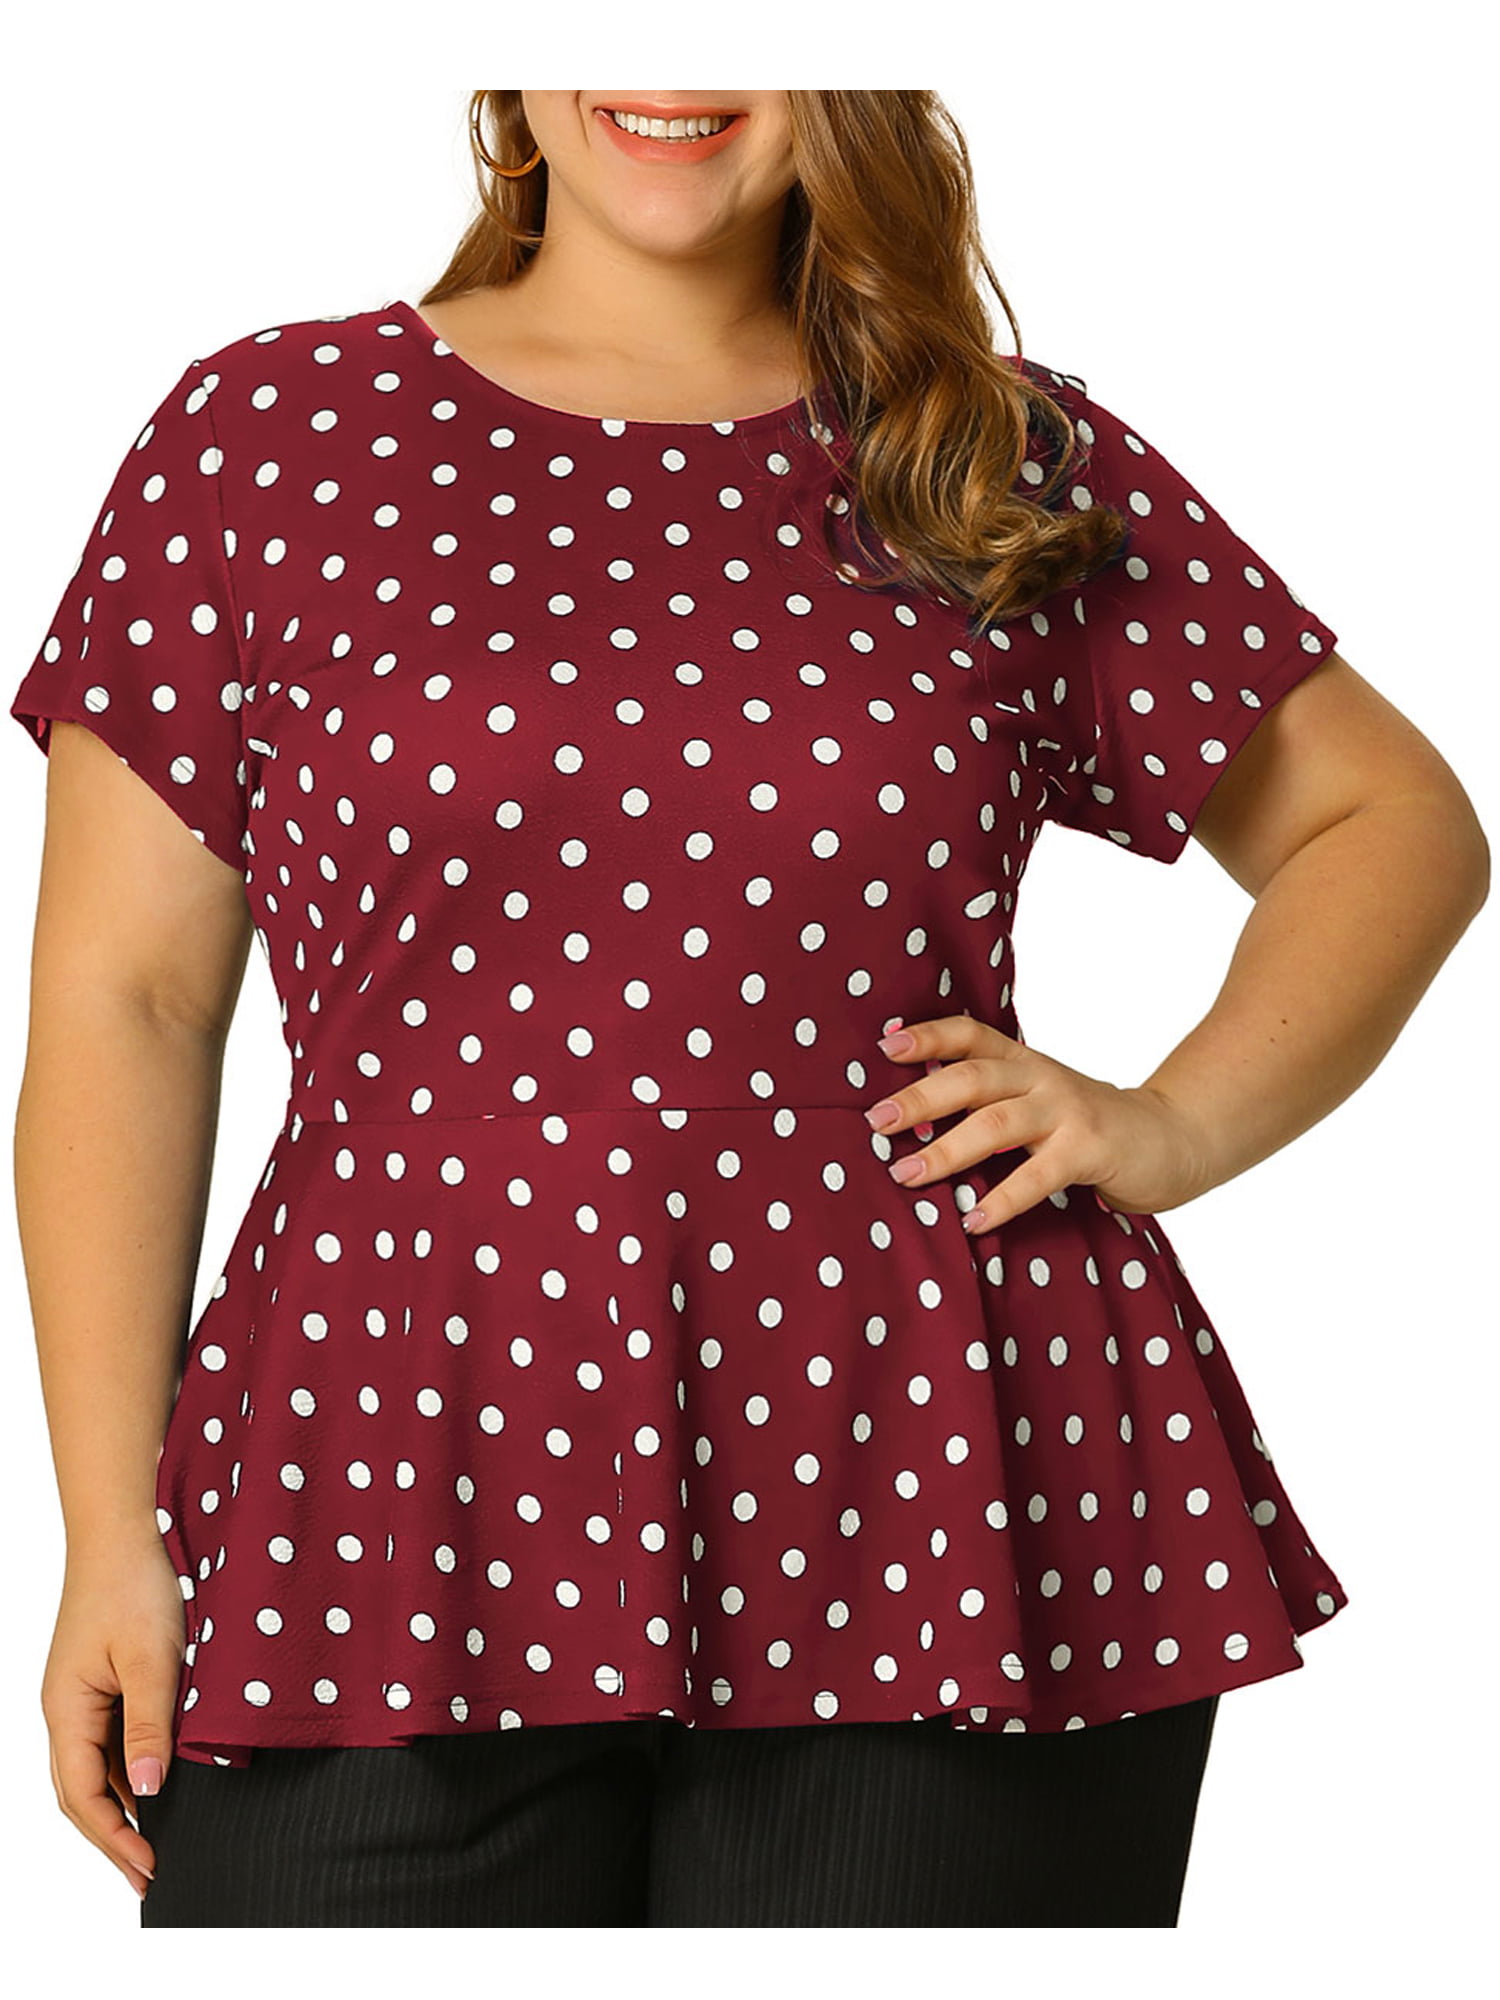 Women's Plus Size Dots Peplum Top 3X Burgundy - Walmart.com - Walmart.com